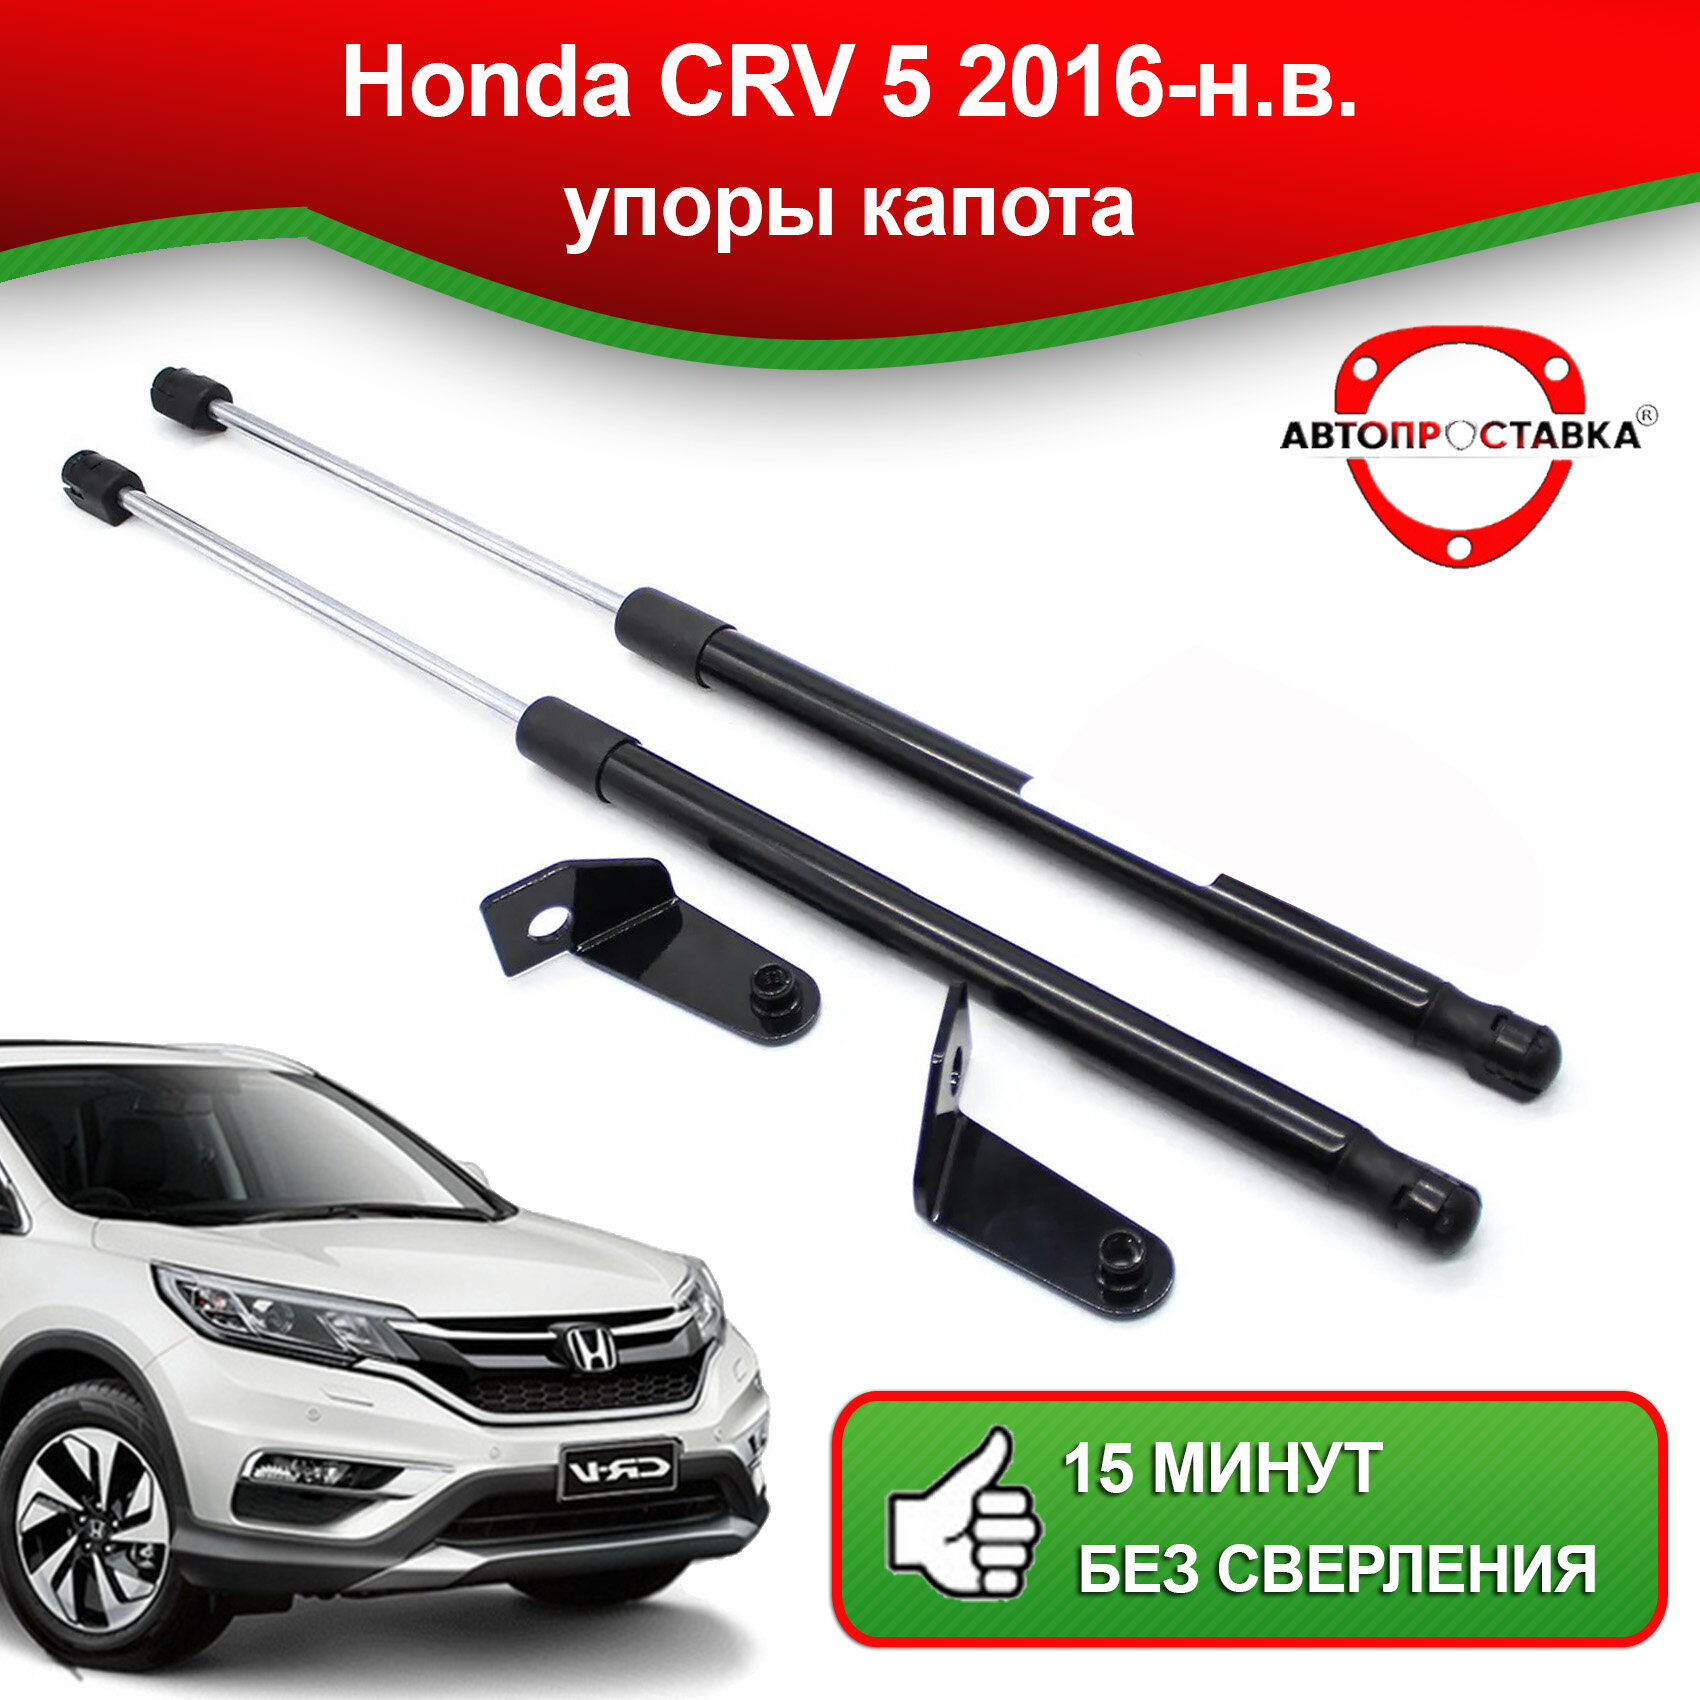 Упоры капота для Honda CRV 5 2016-наст. время / Газовые амортизаторы капота Хонда СРВ 5